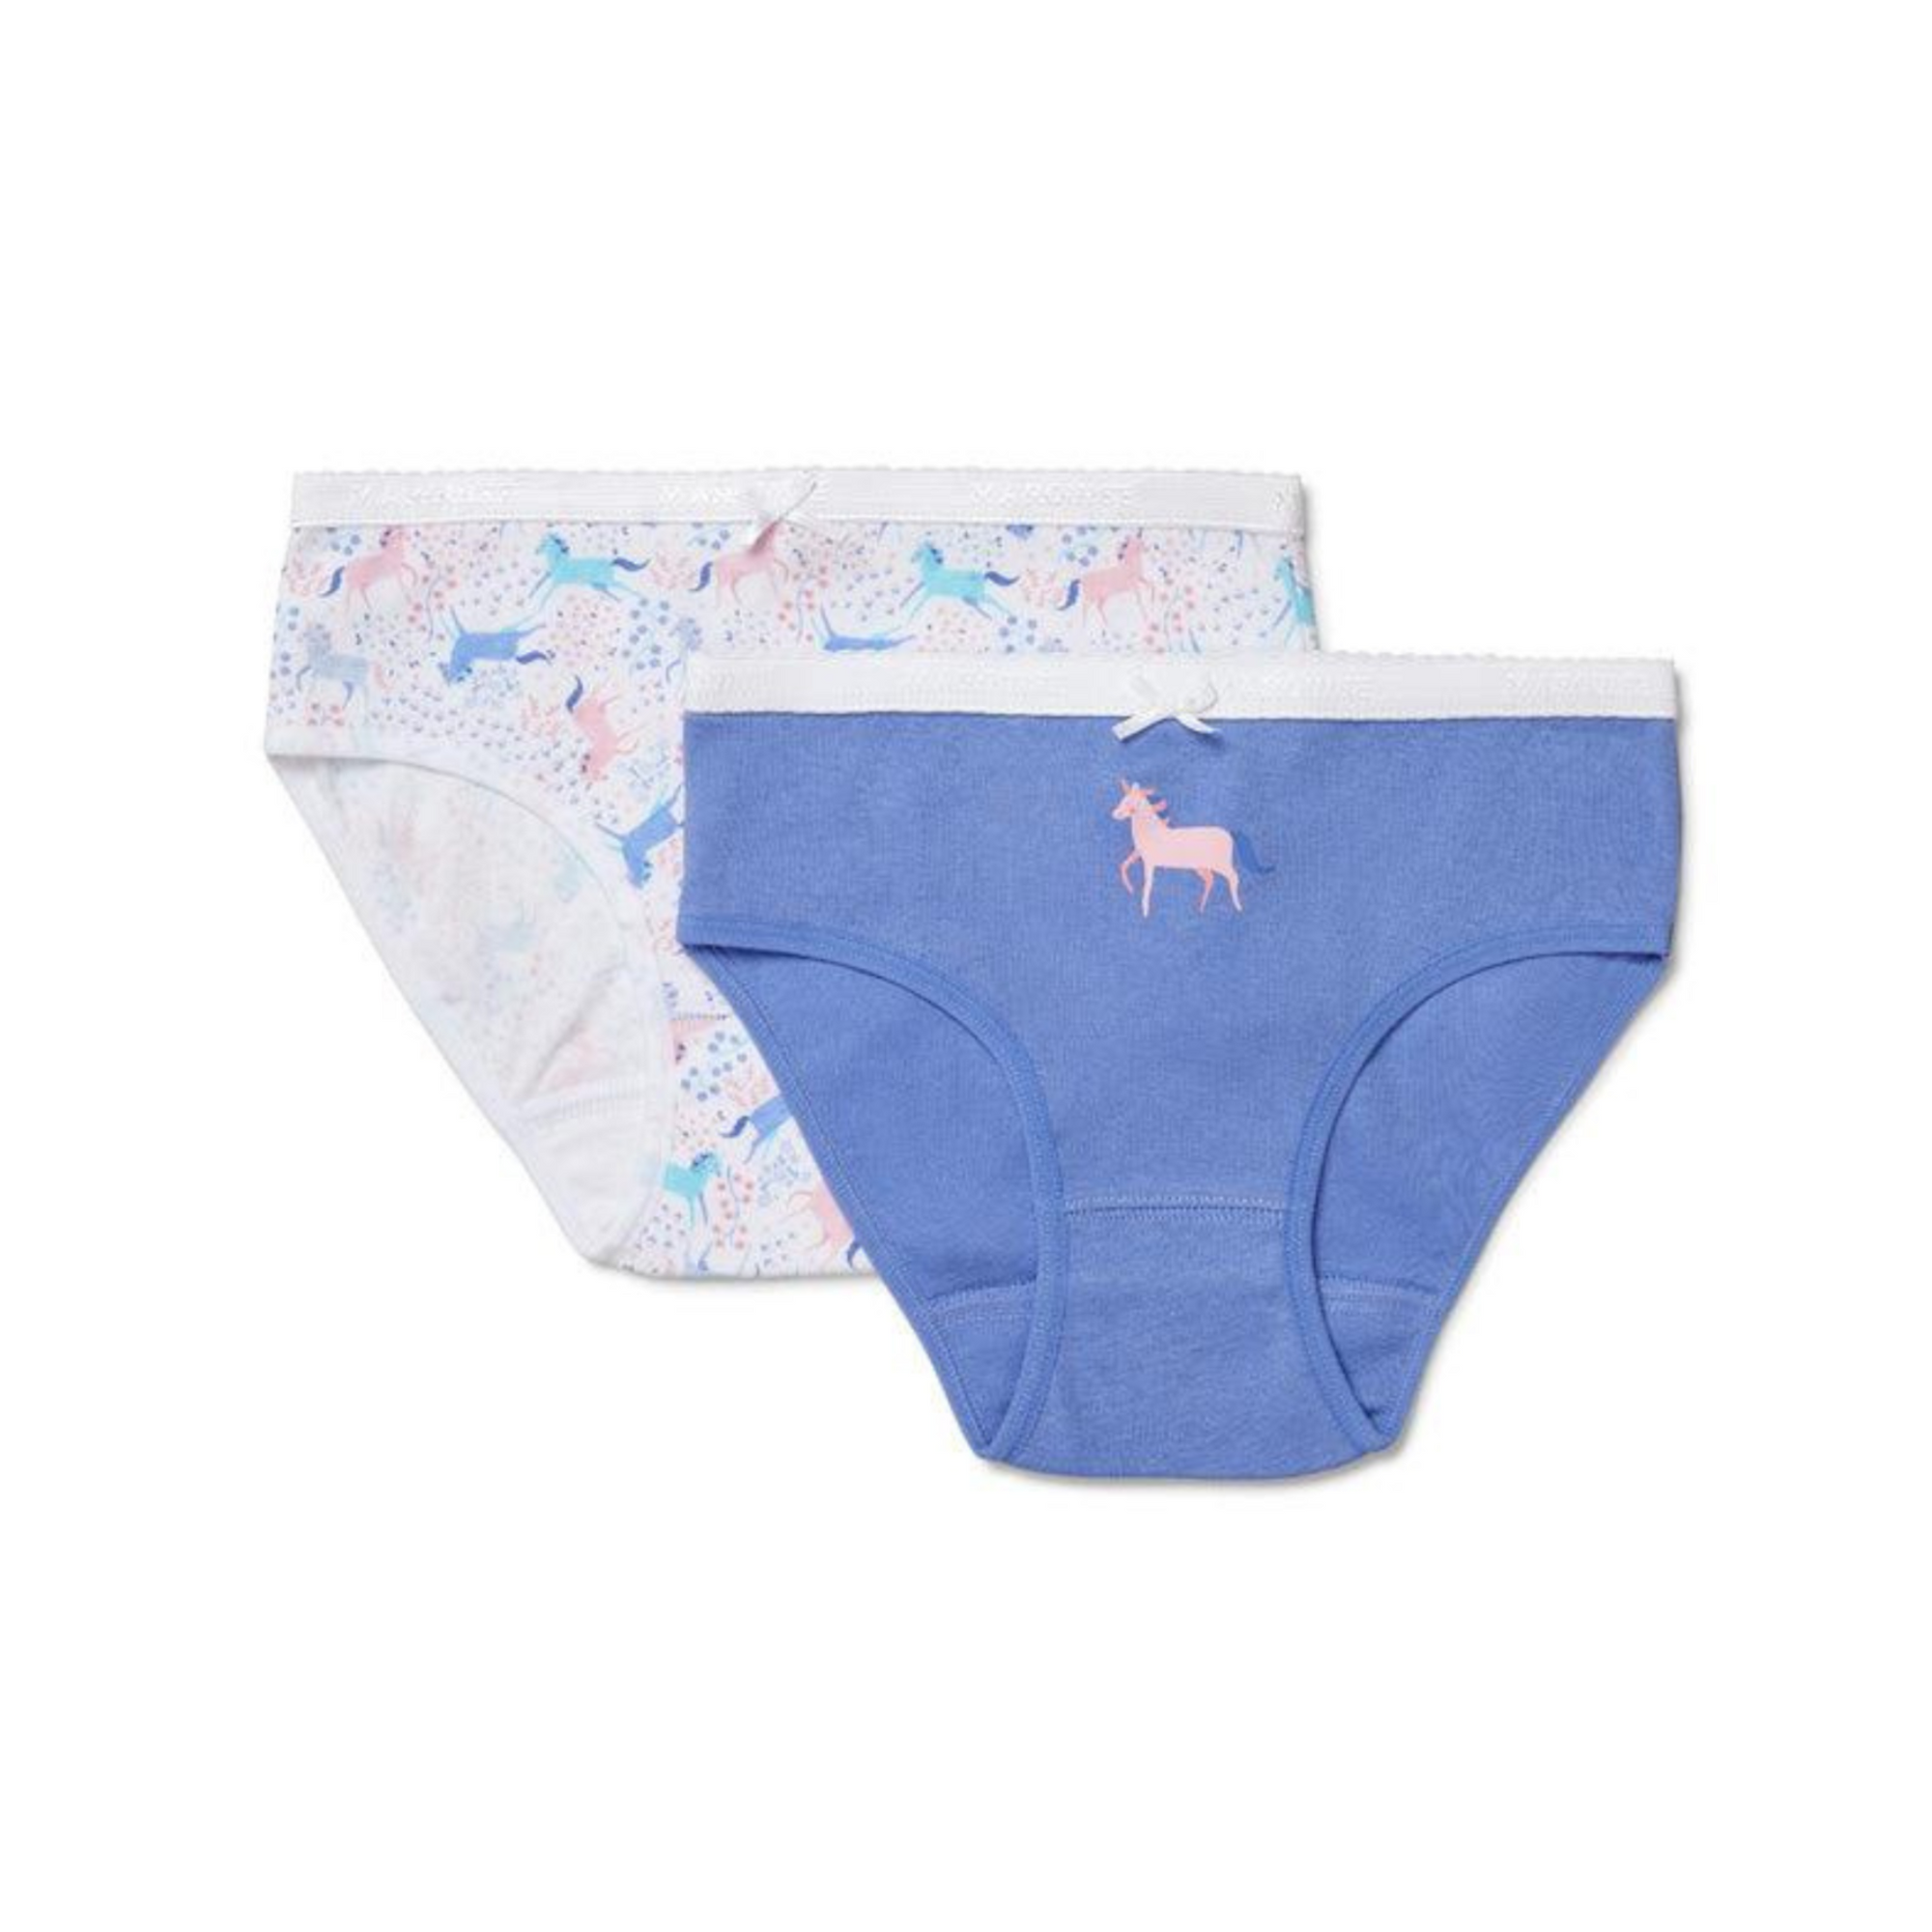 Marquise Girls Unicorn 2 Pack Underwear - Powder Blue/ Multi